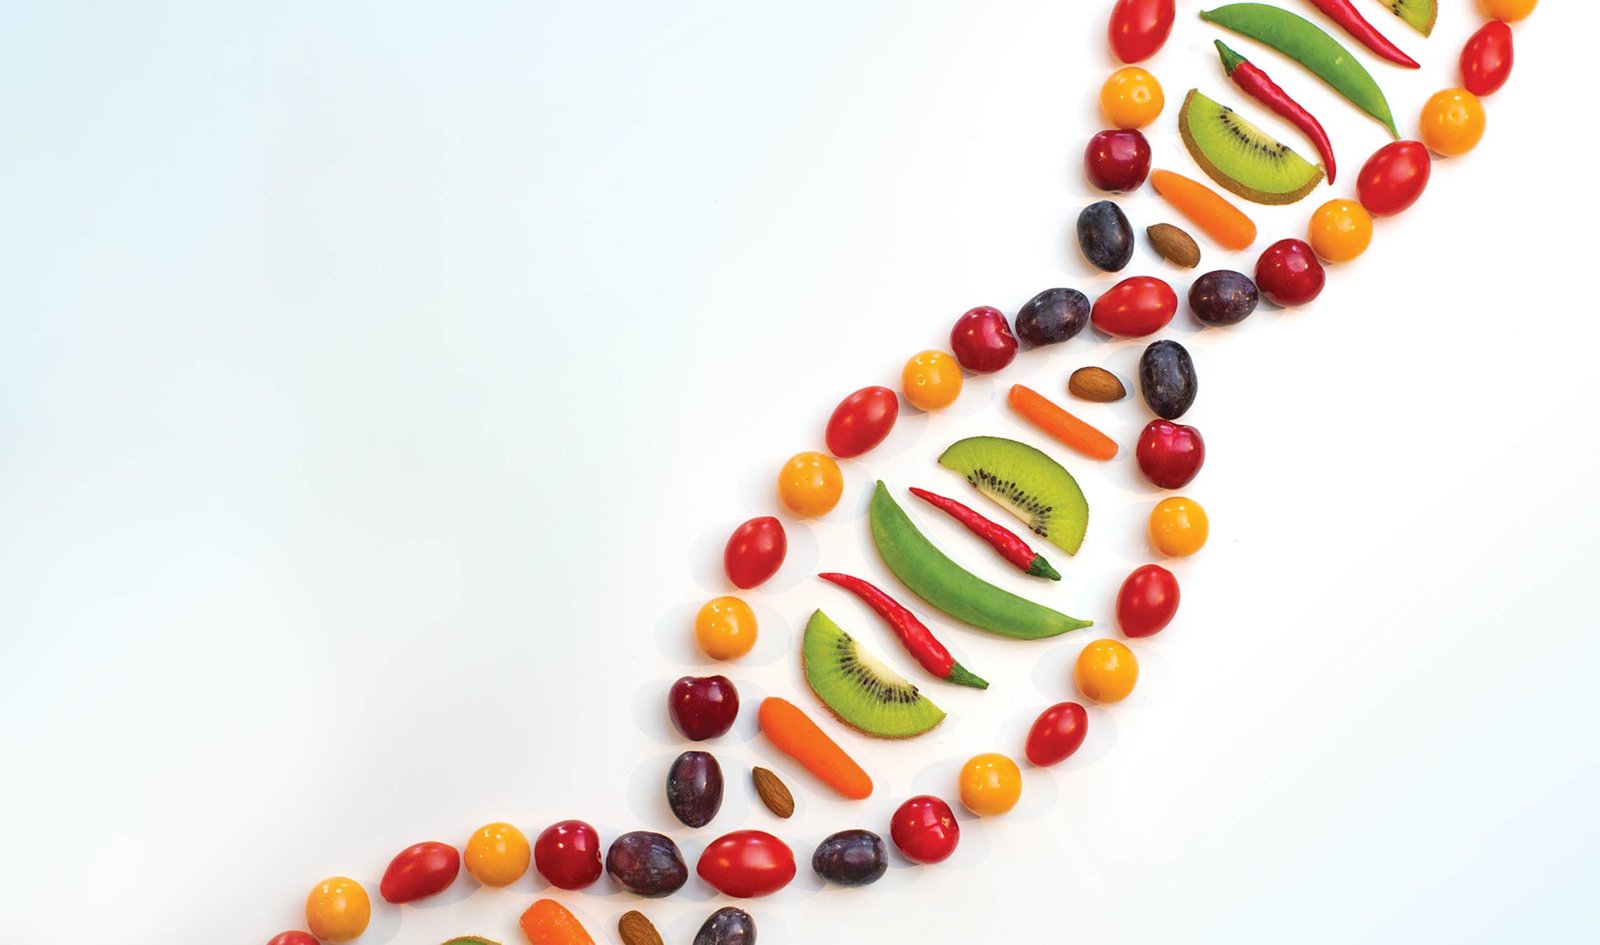 gene-box-looks-at-nutrigenomics-revolutinizing-wellness-industry